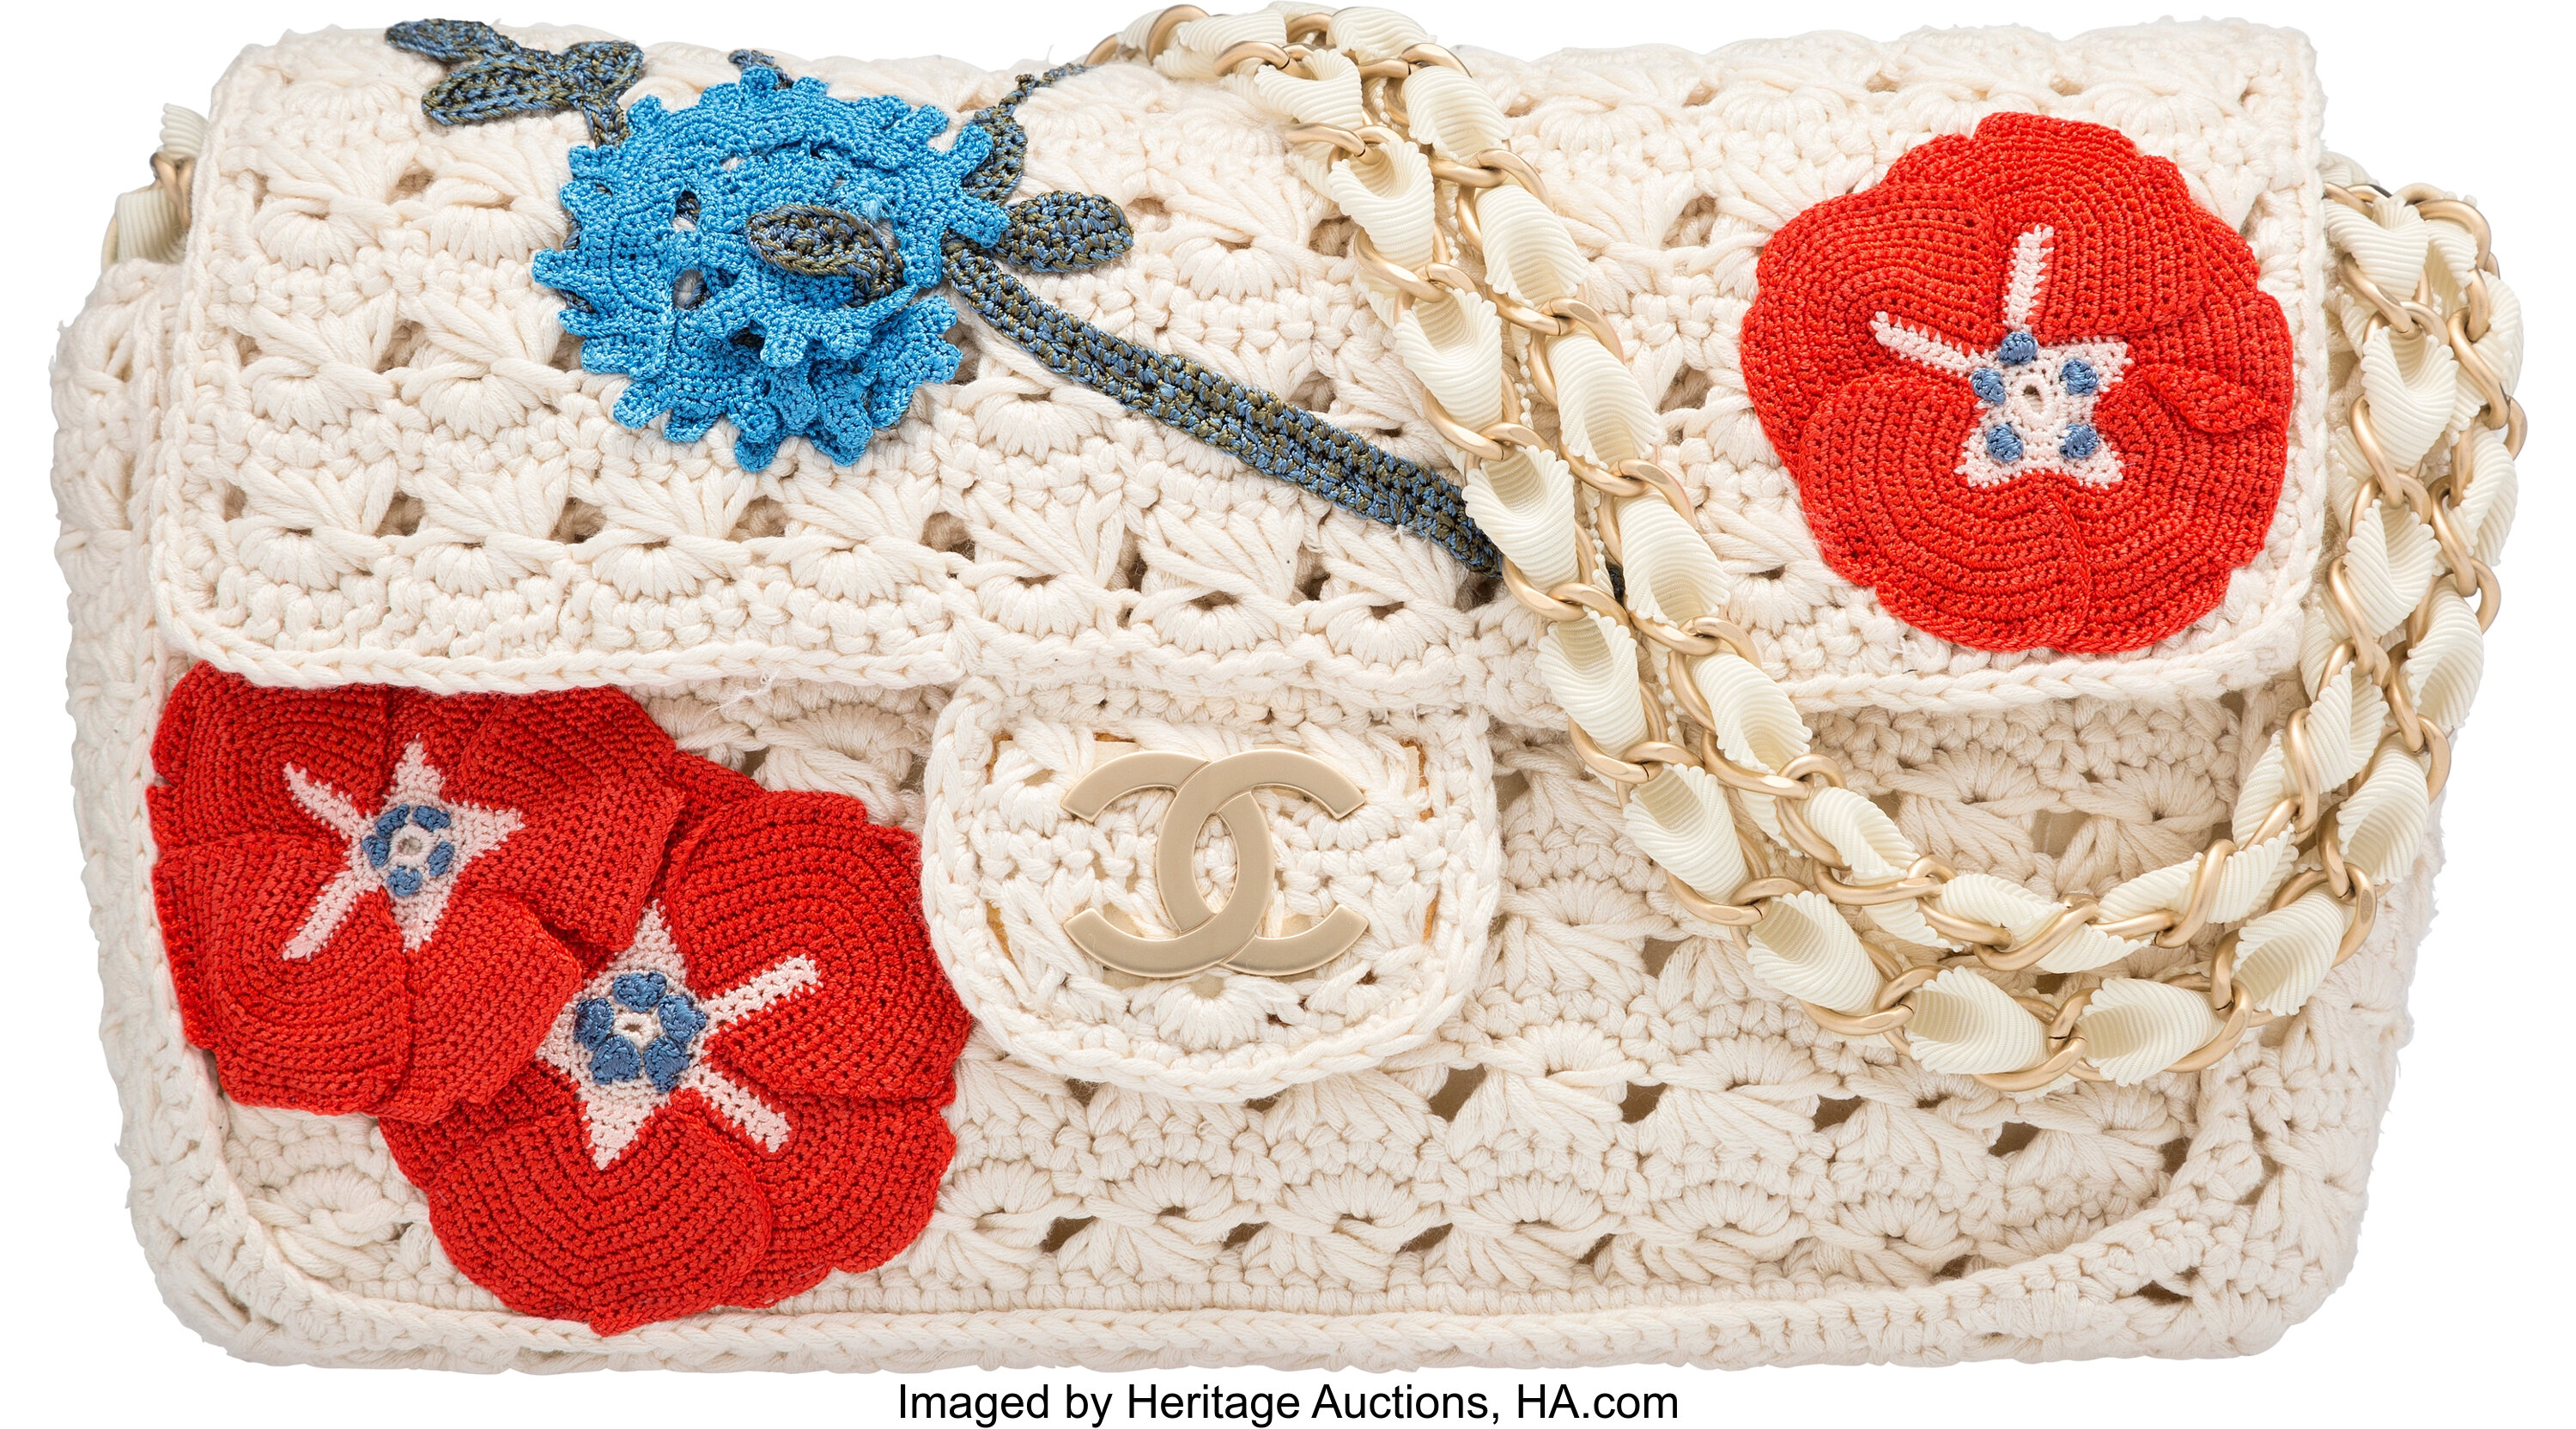 Chanel Crochet Flap Bag